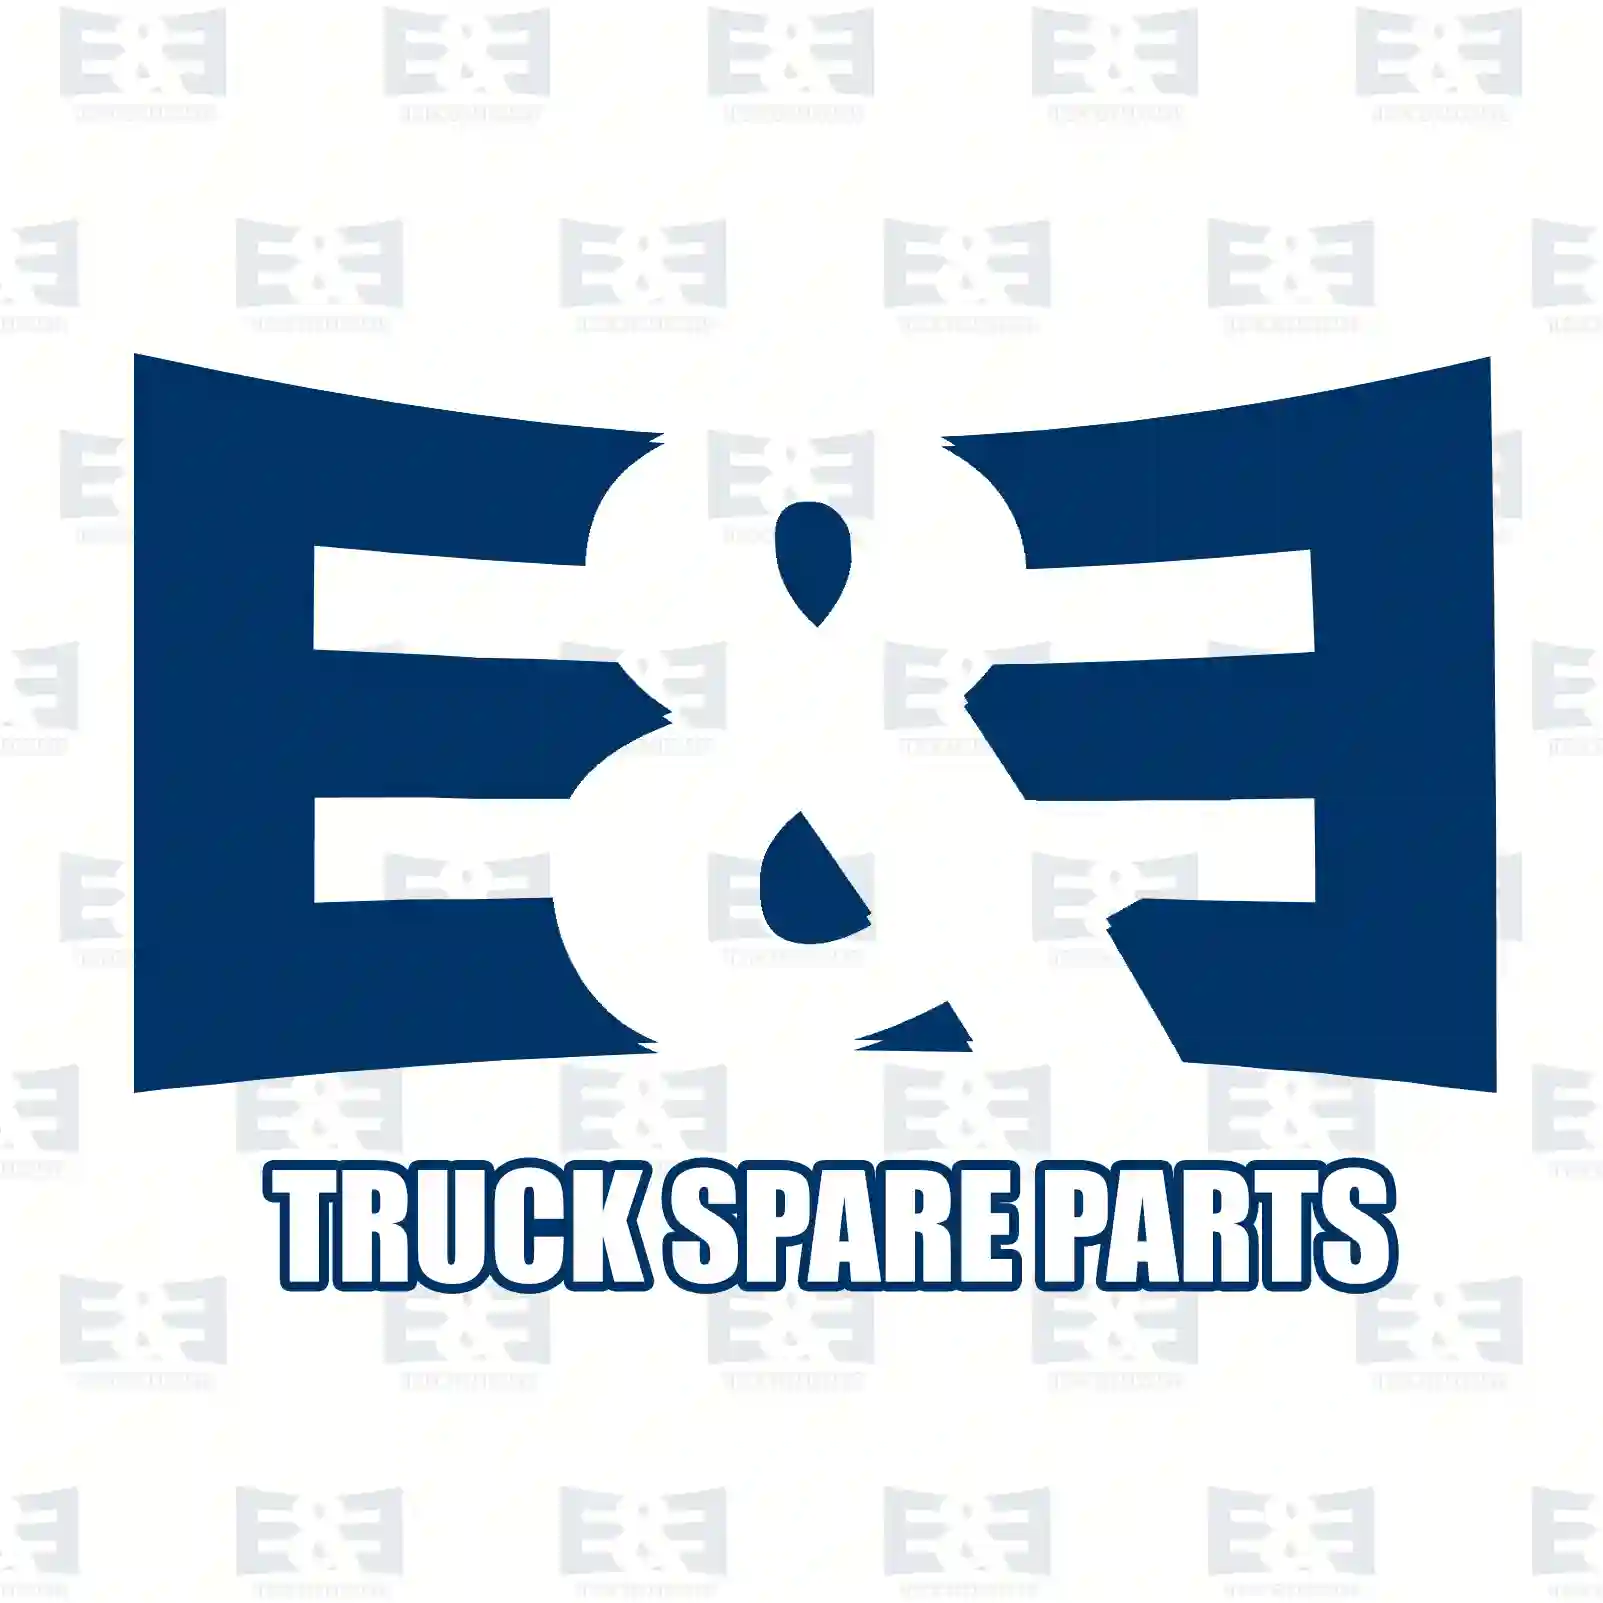 Shock absorber, rear, 2E2283308, 1C15-18080-KD, 4346323, , , ||  2E2283308 E&E Truck Spare Parts | Truck Spare Parts, Auotomotive Spare Parts Shock absorber, rear, 2E2283308, 1C15-18080-KD, 4346323, , , ||  2E2283308 E&E Truck Spare Parts | Truck Spare Parts, Auotomotive Spare Parts